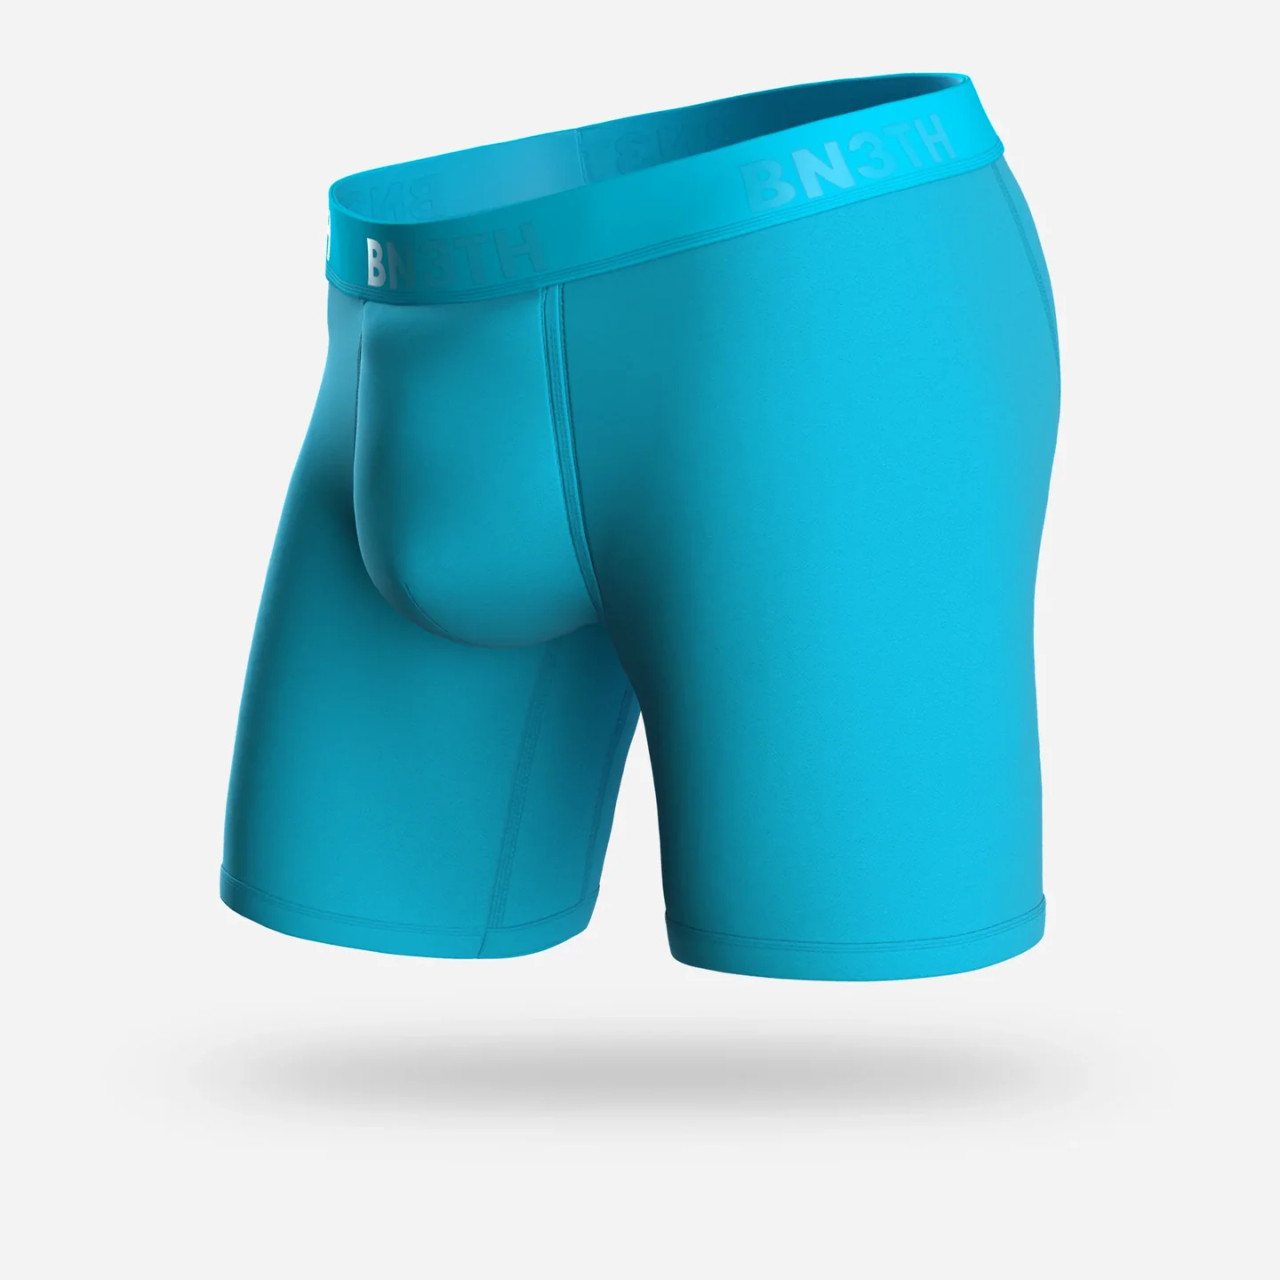 BN3TH Underwear Classic Boxer Brief Solid - Baja - BUNKER